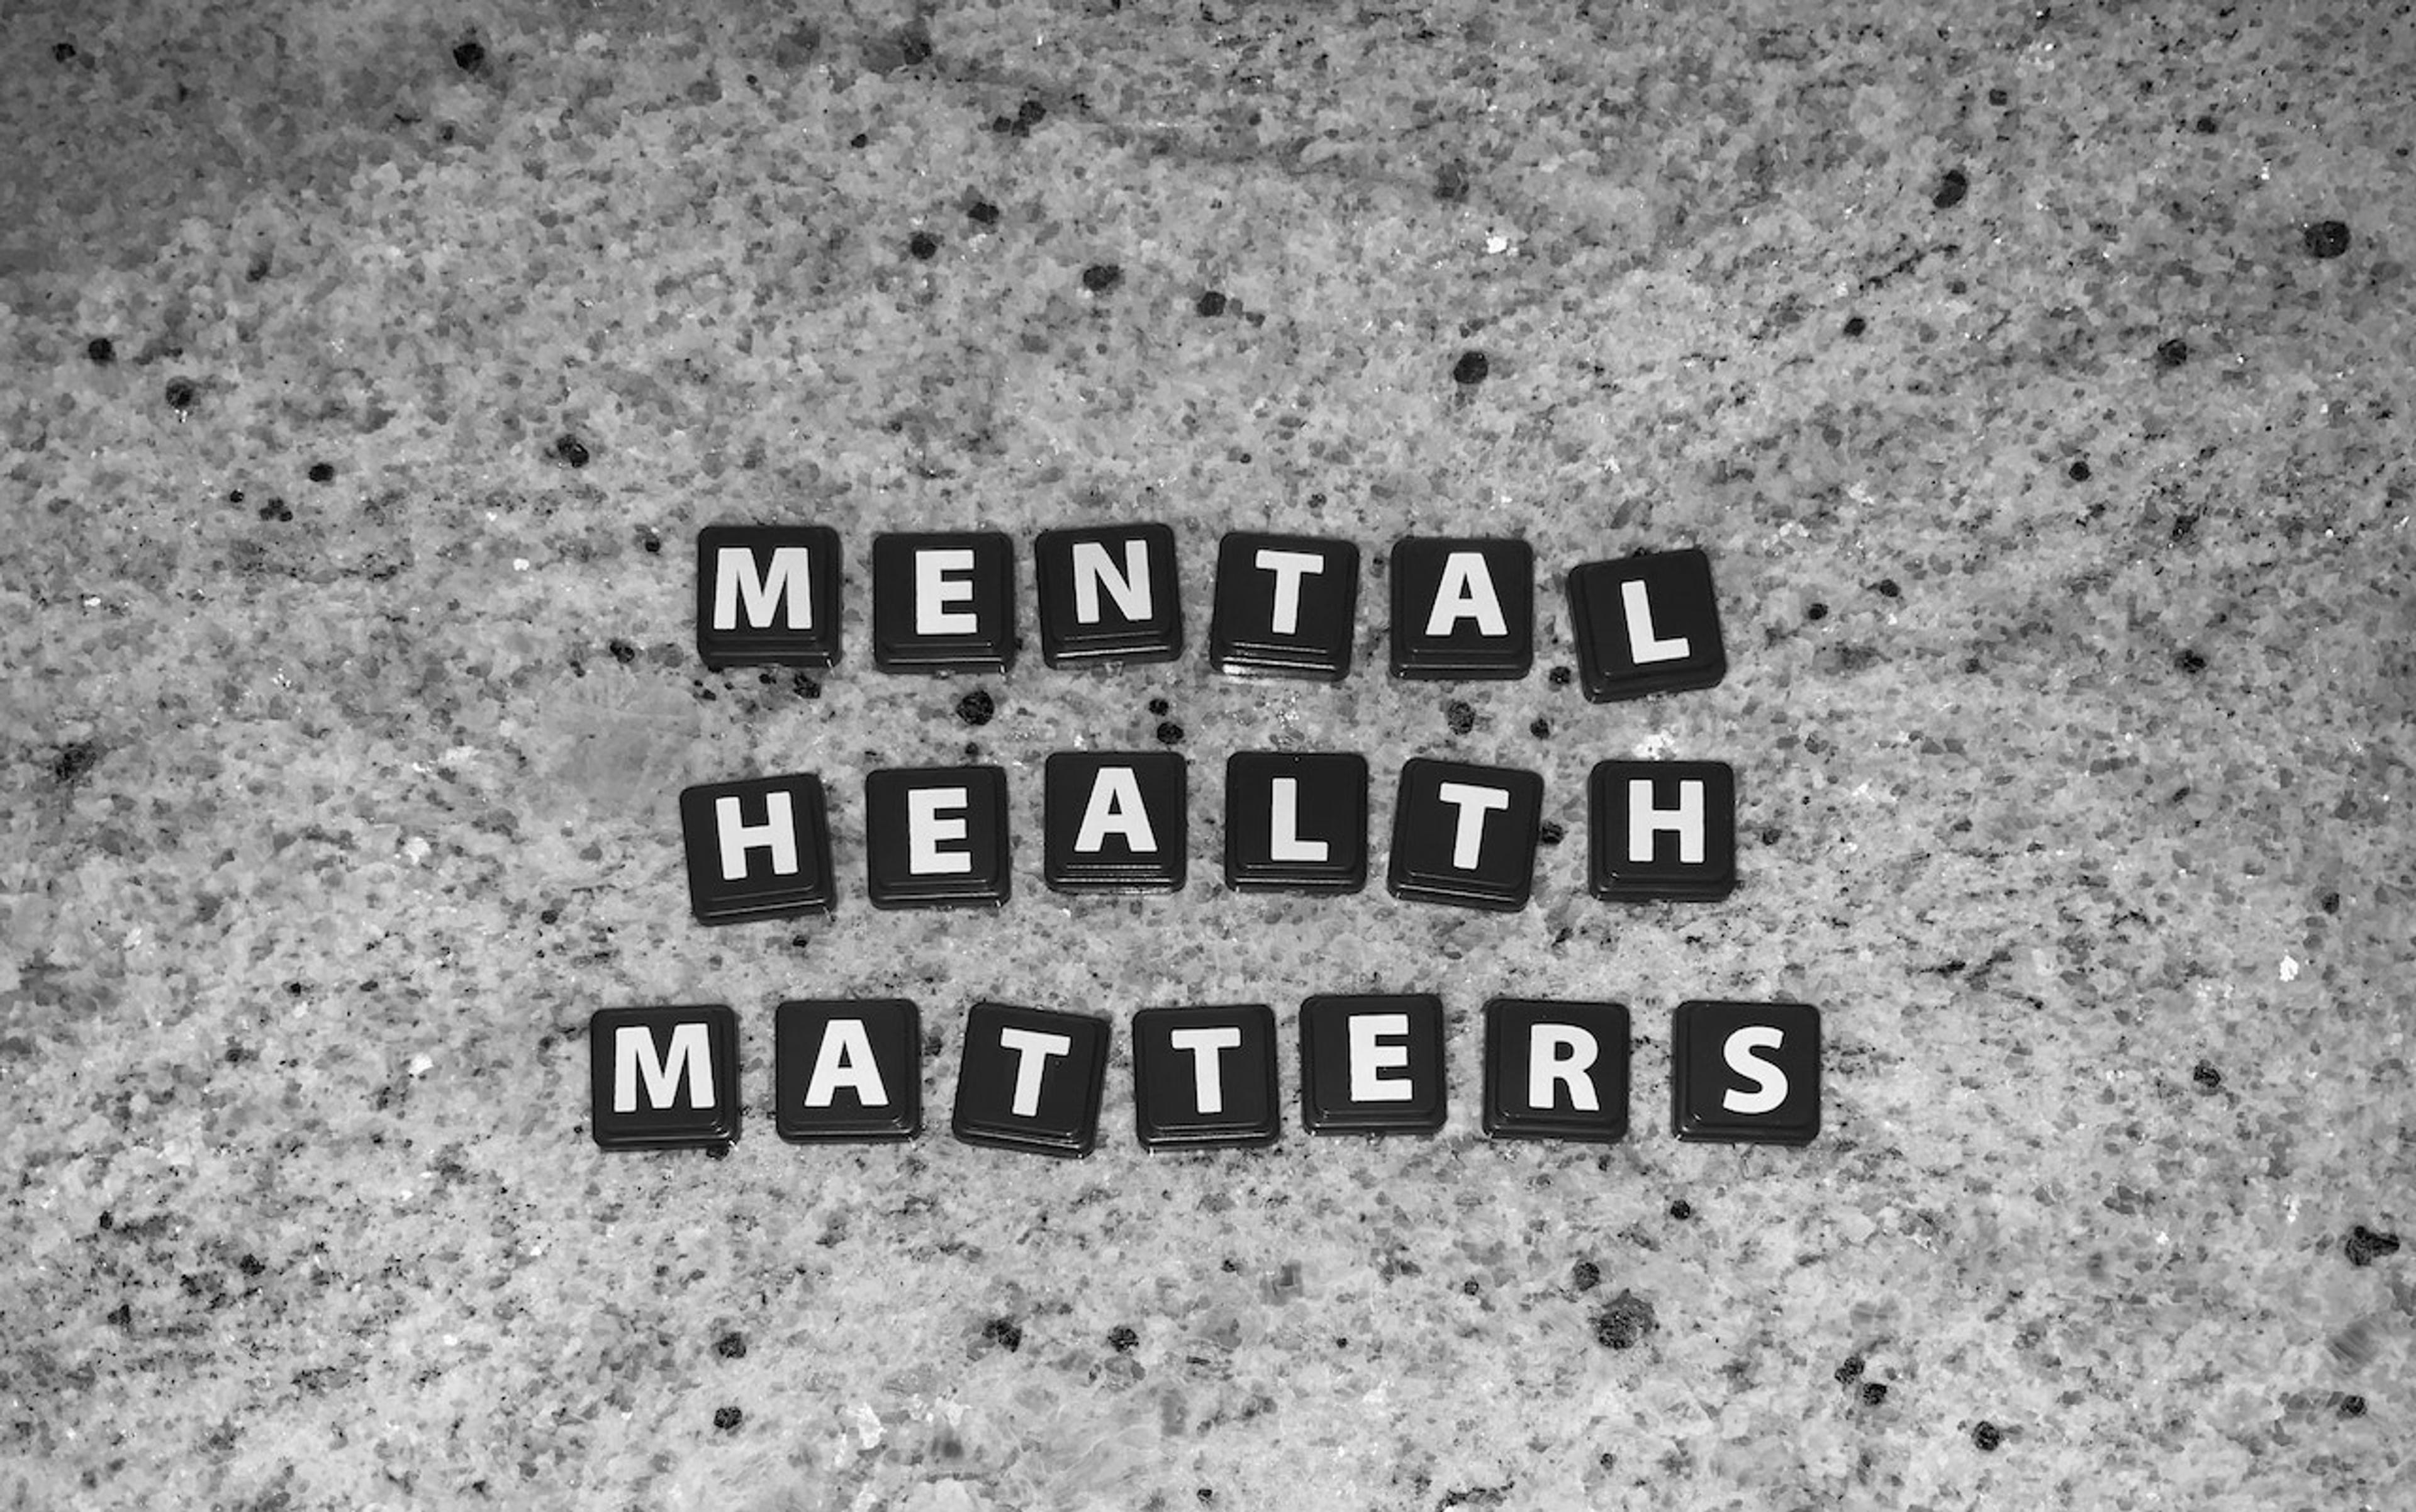 Black tile letters spelling out "mental health matters"